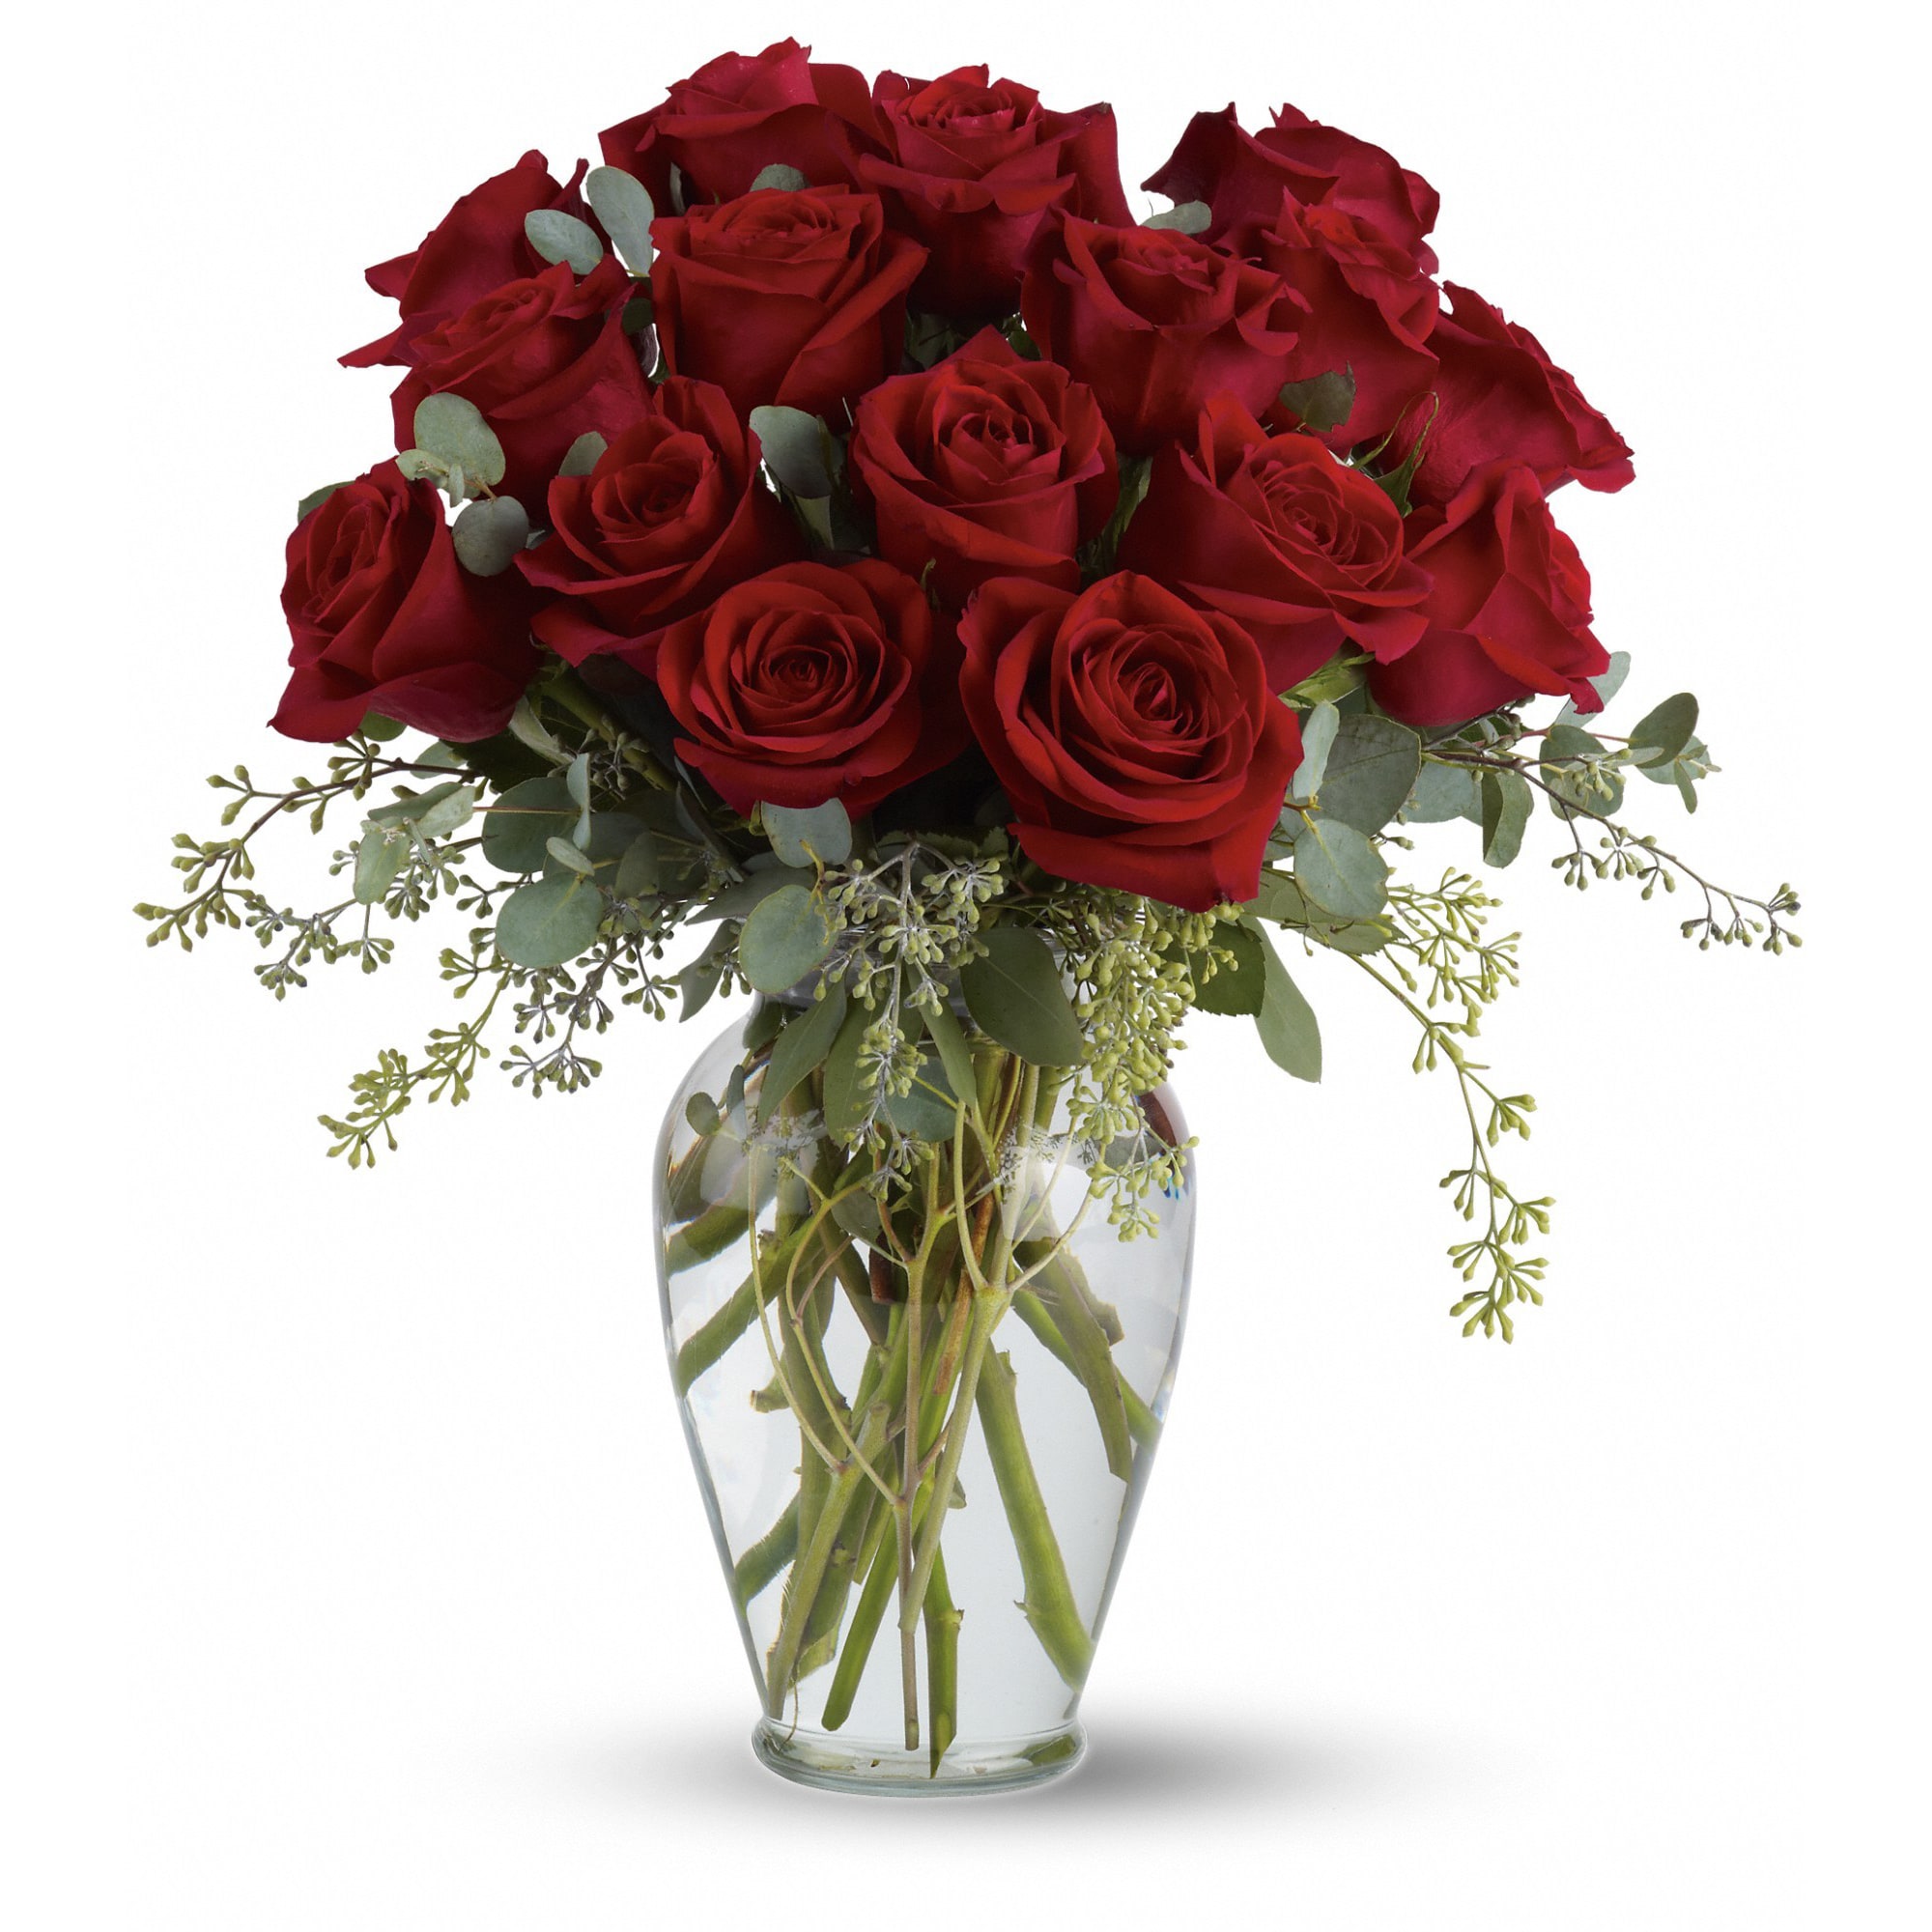 Full Heart 16 Premium Red Roses By Teleflora In Marshfield Mo